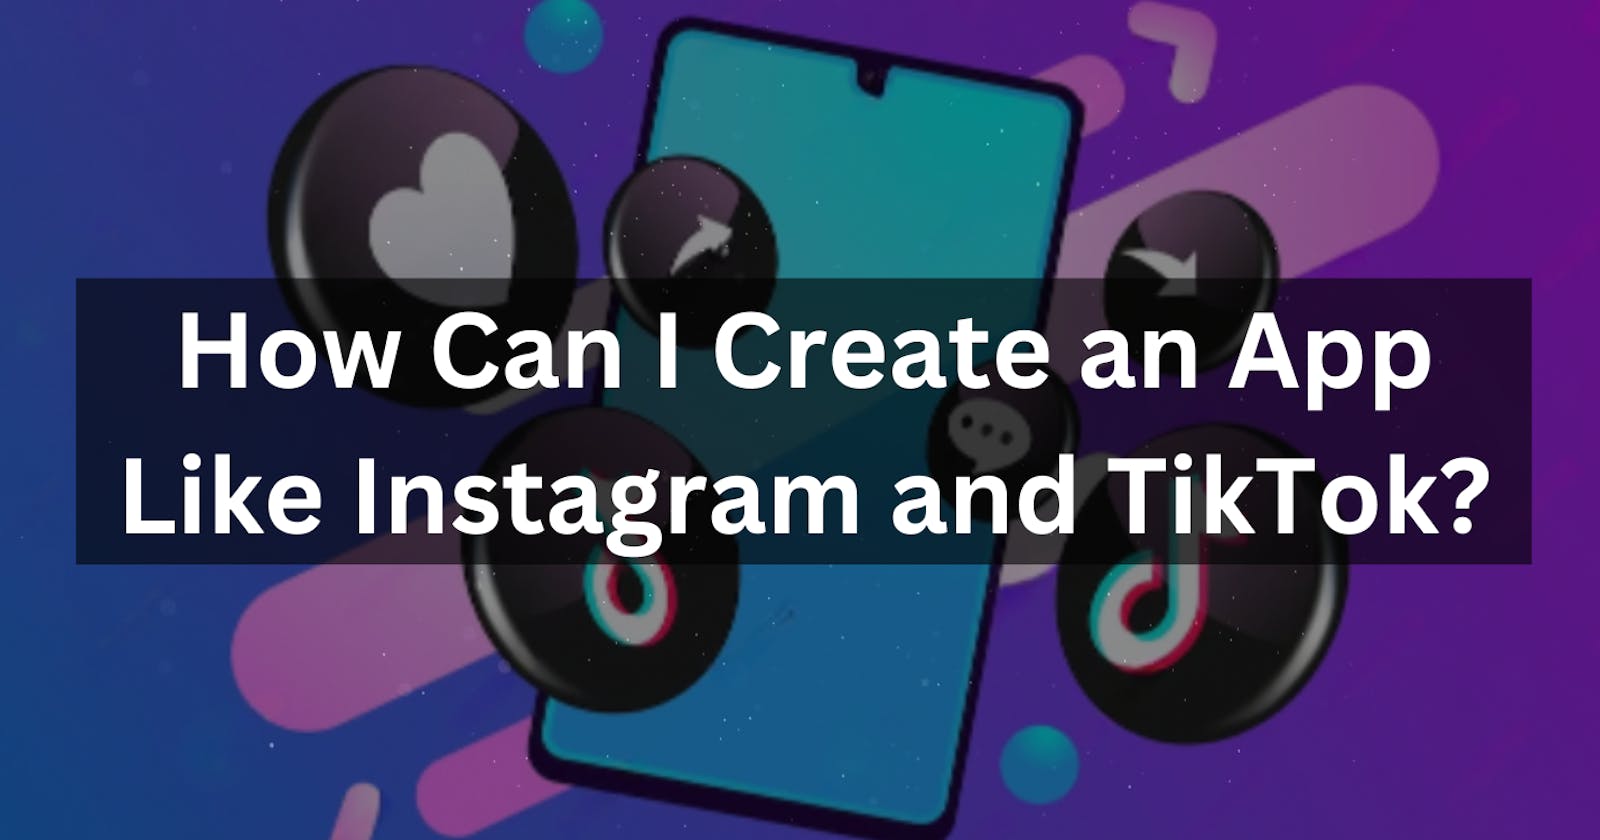 How Can I Create an App Like Instagram and TikTok?